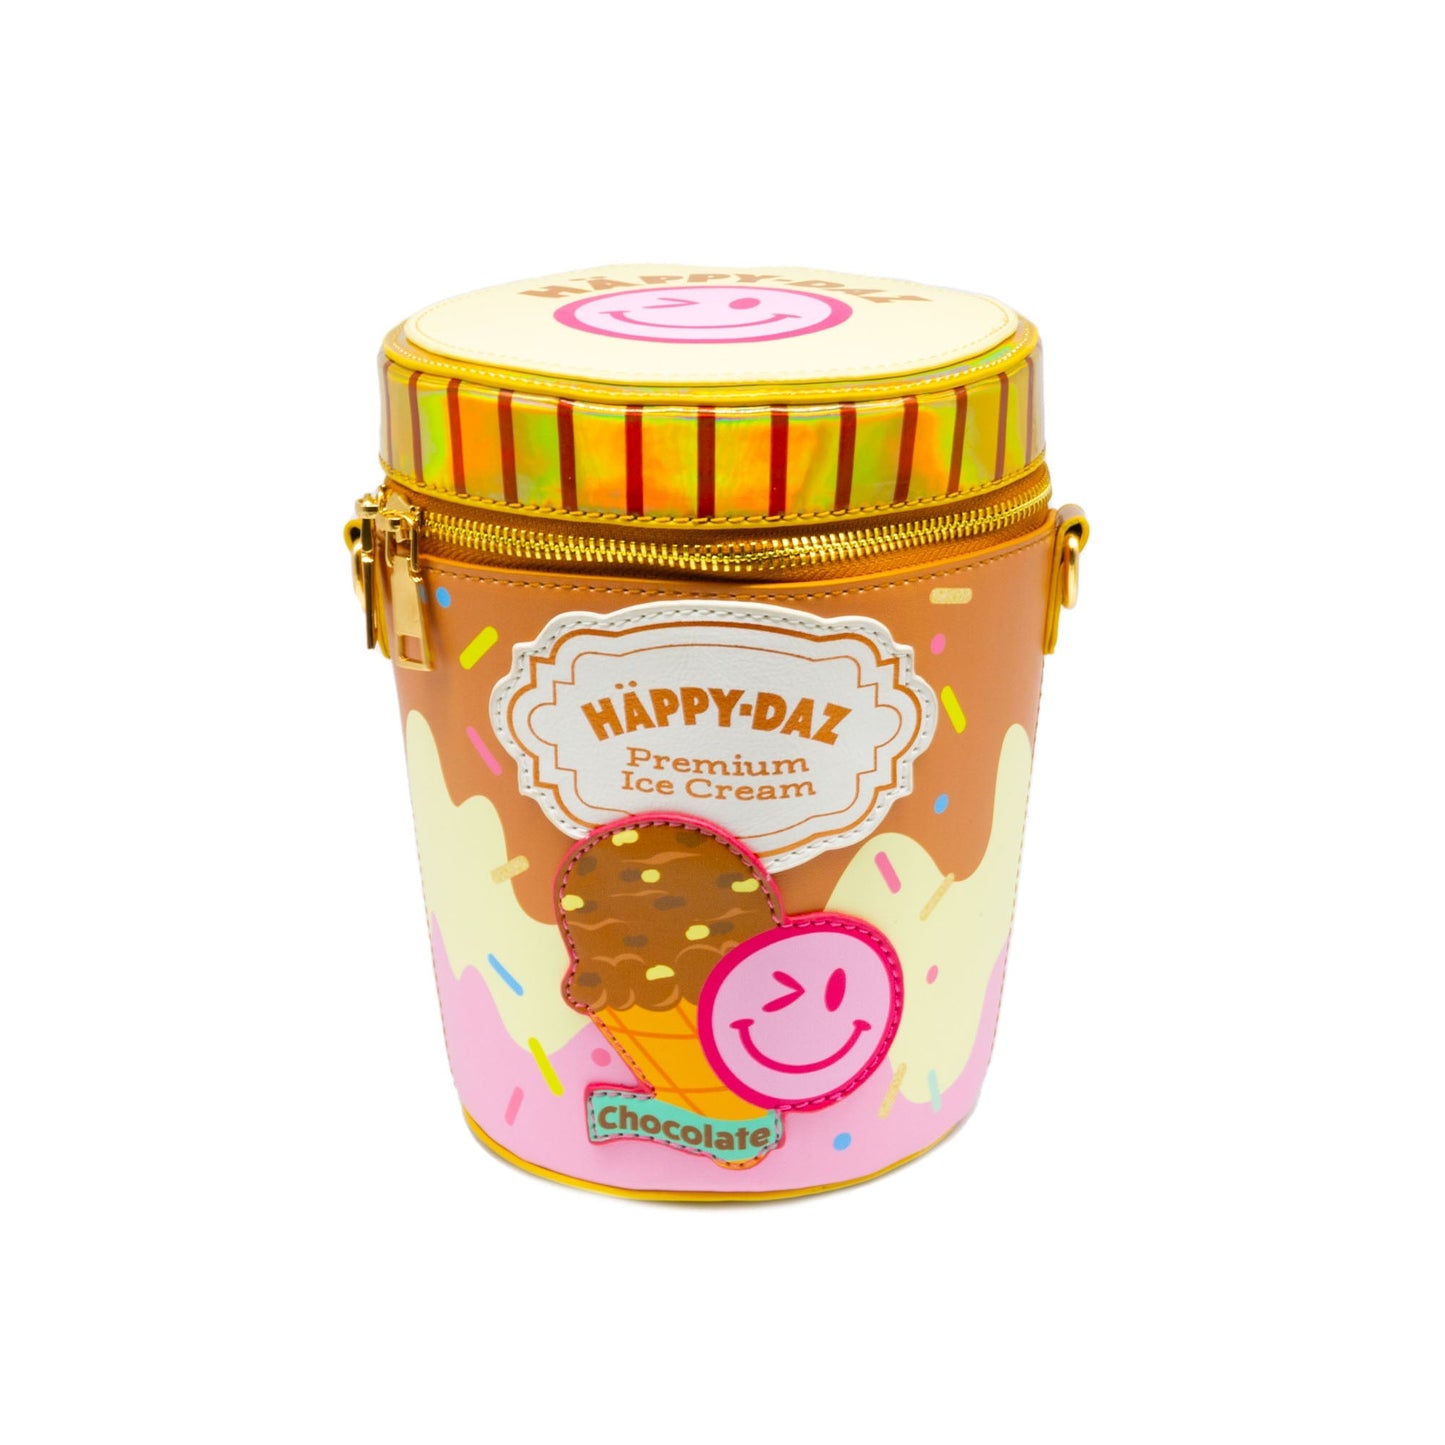 Happy Daz Ice Cream Tub Handbag - Chocolate